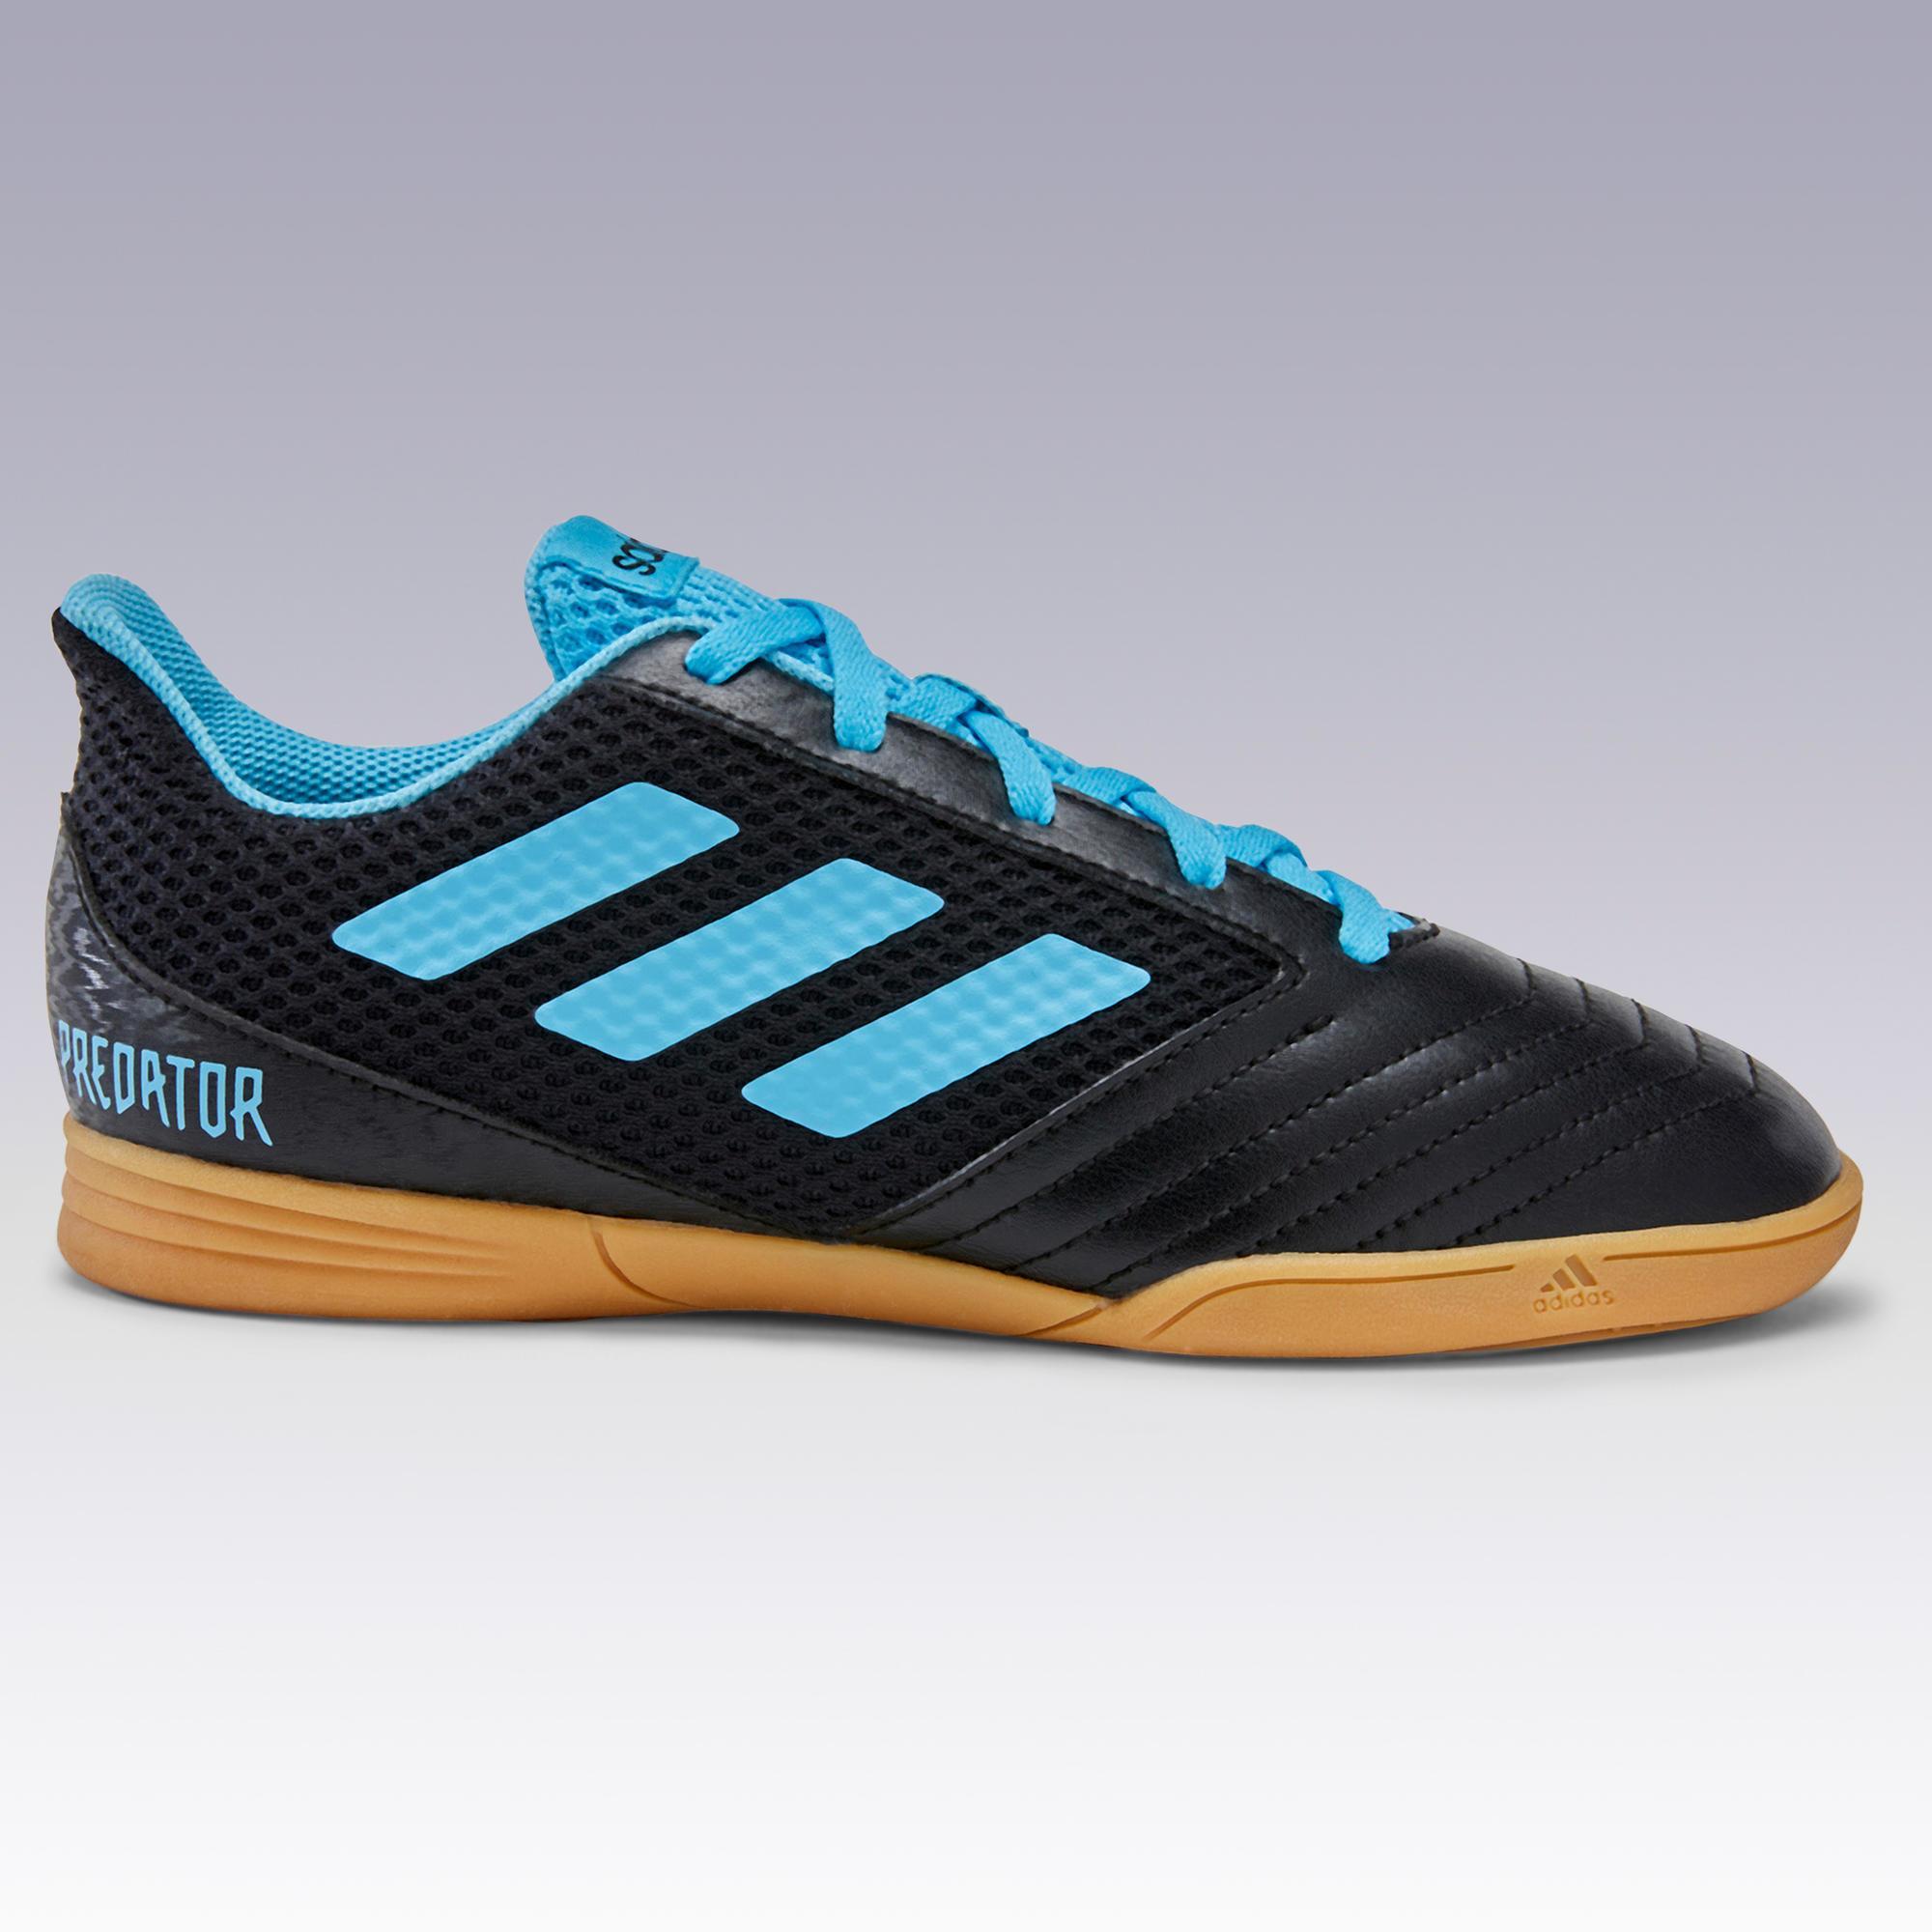 Chaussures de Futsal PREDATOR enfant Noir Bleu Adidas | Decathlon